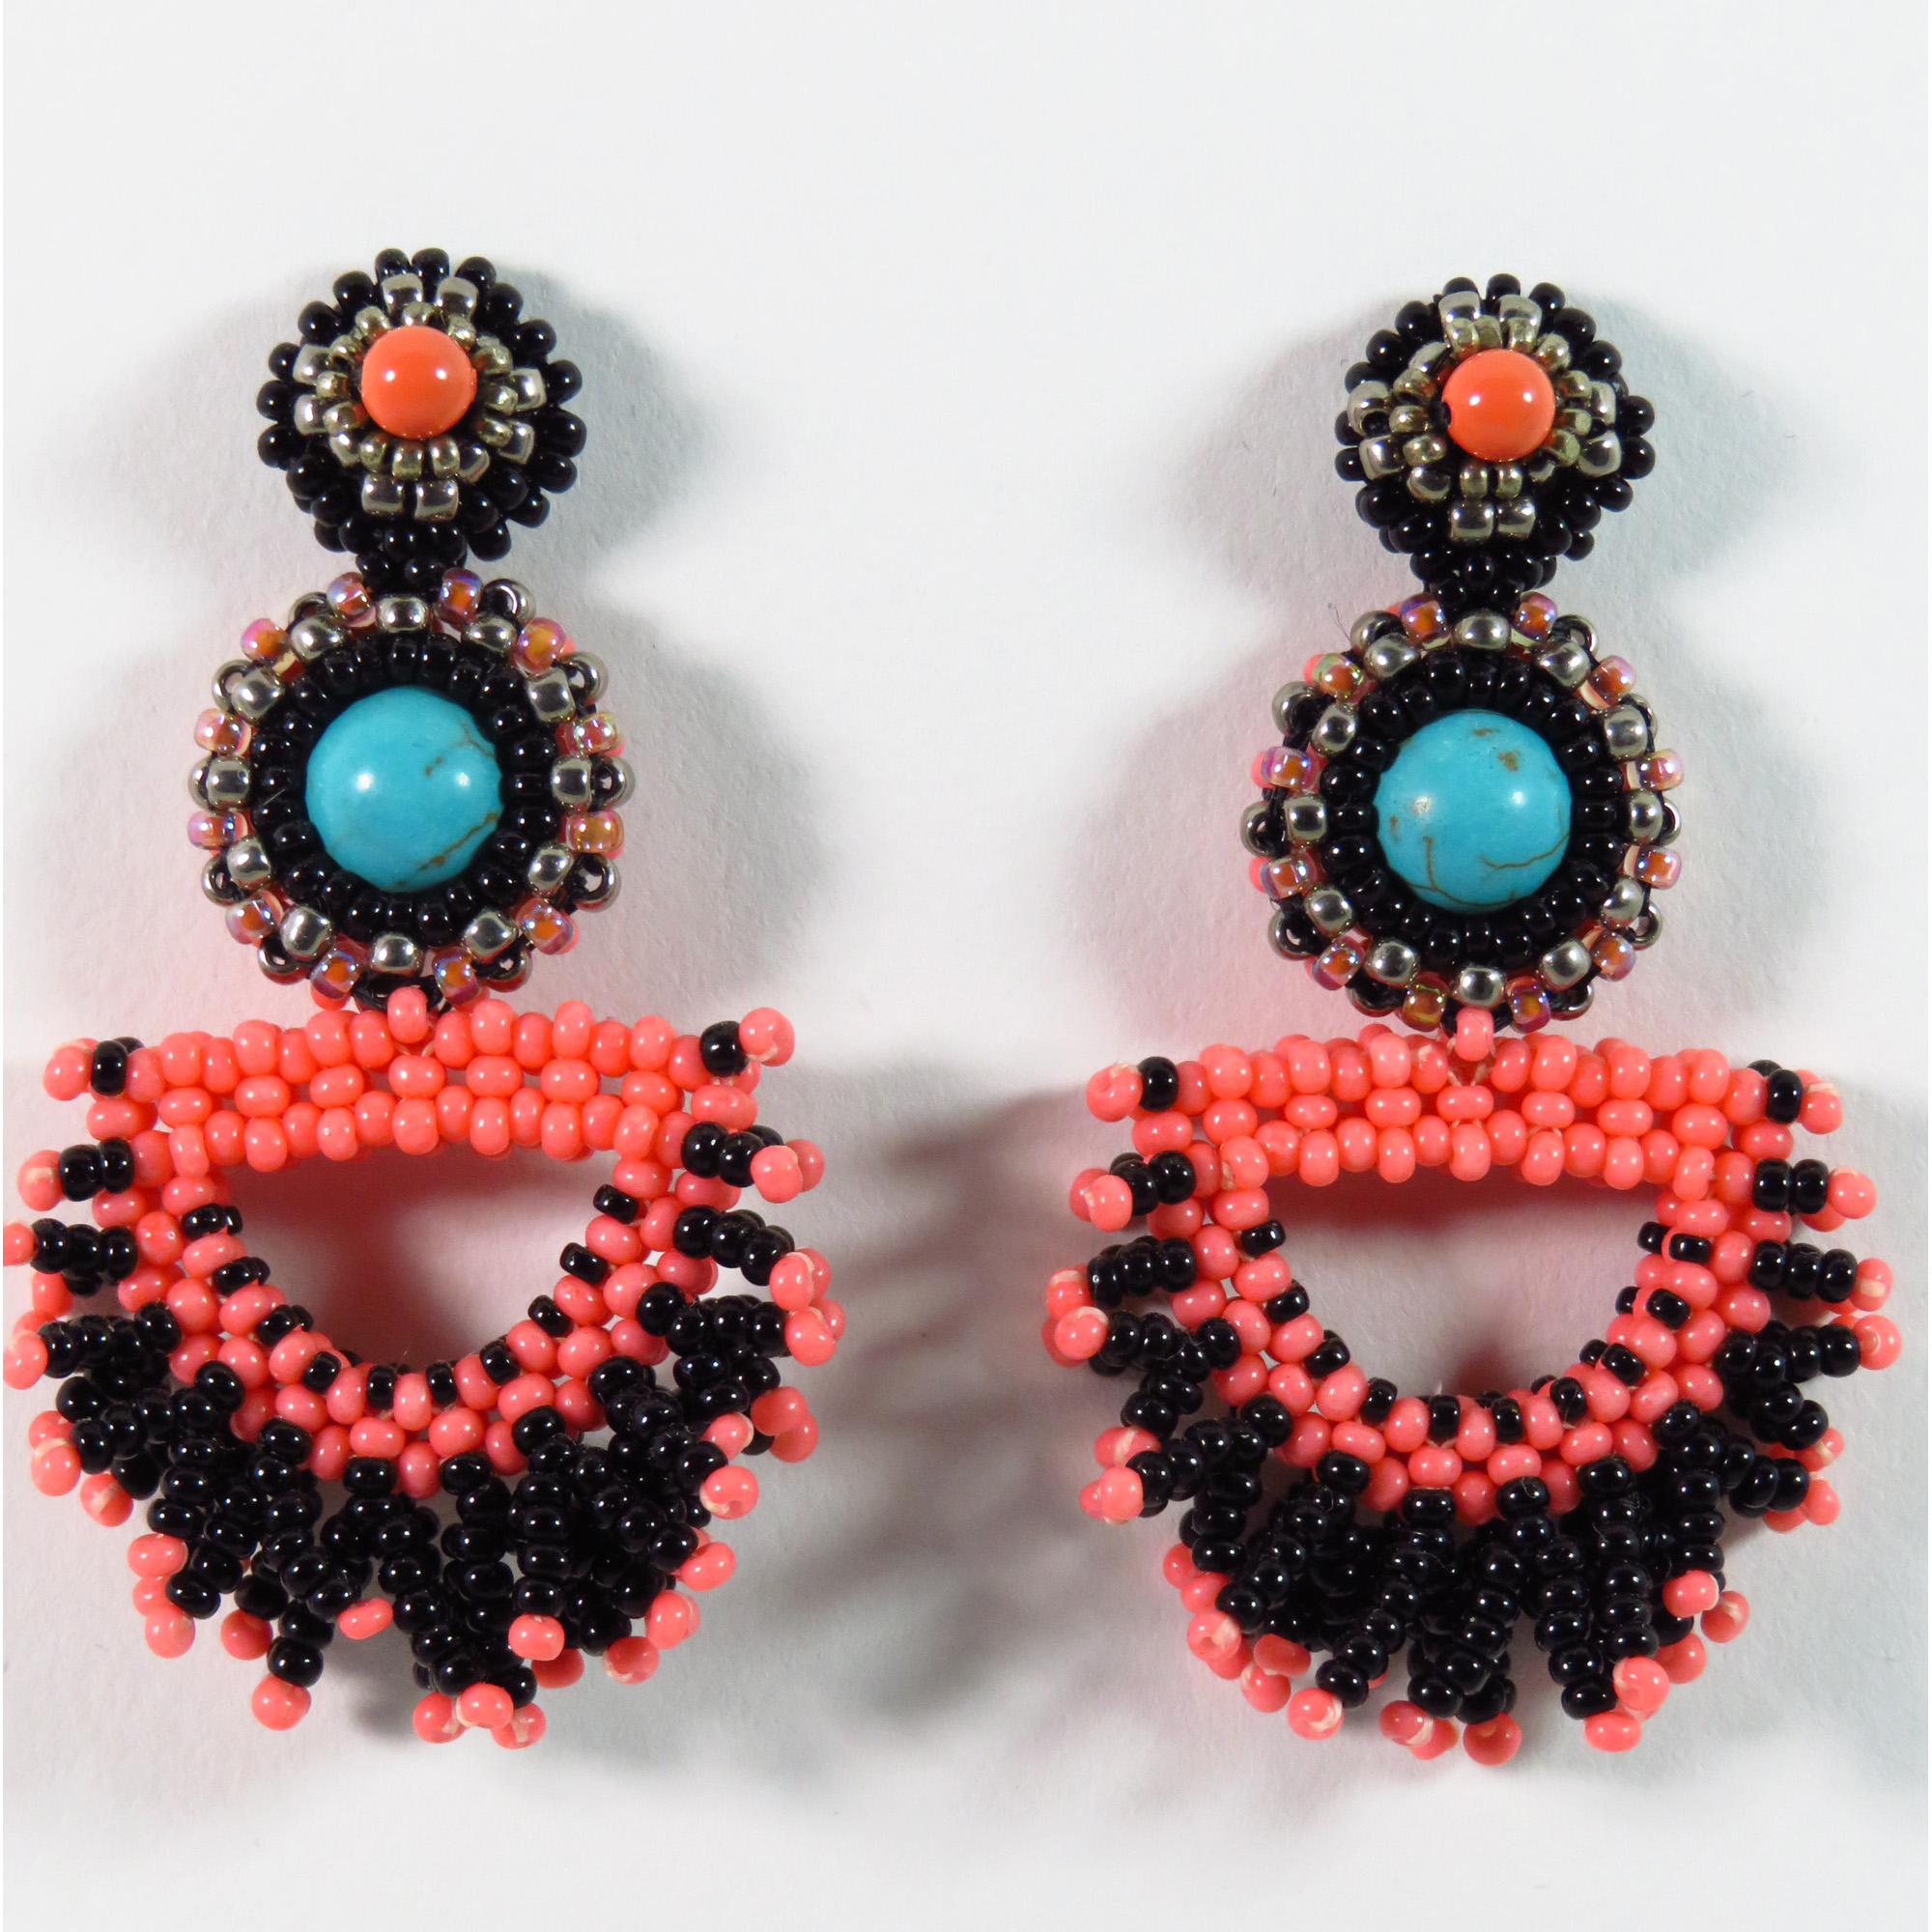 Southwestern style beaded fringe earrings by Bonnie Van Hall